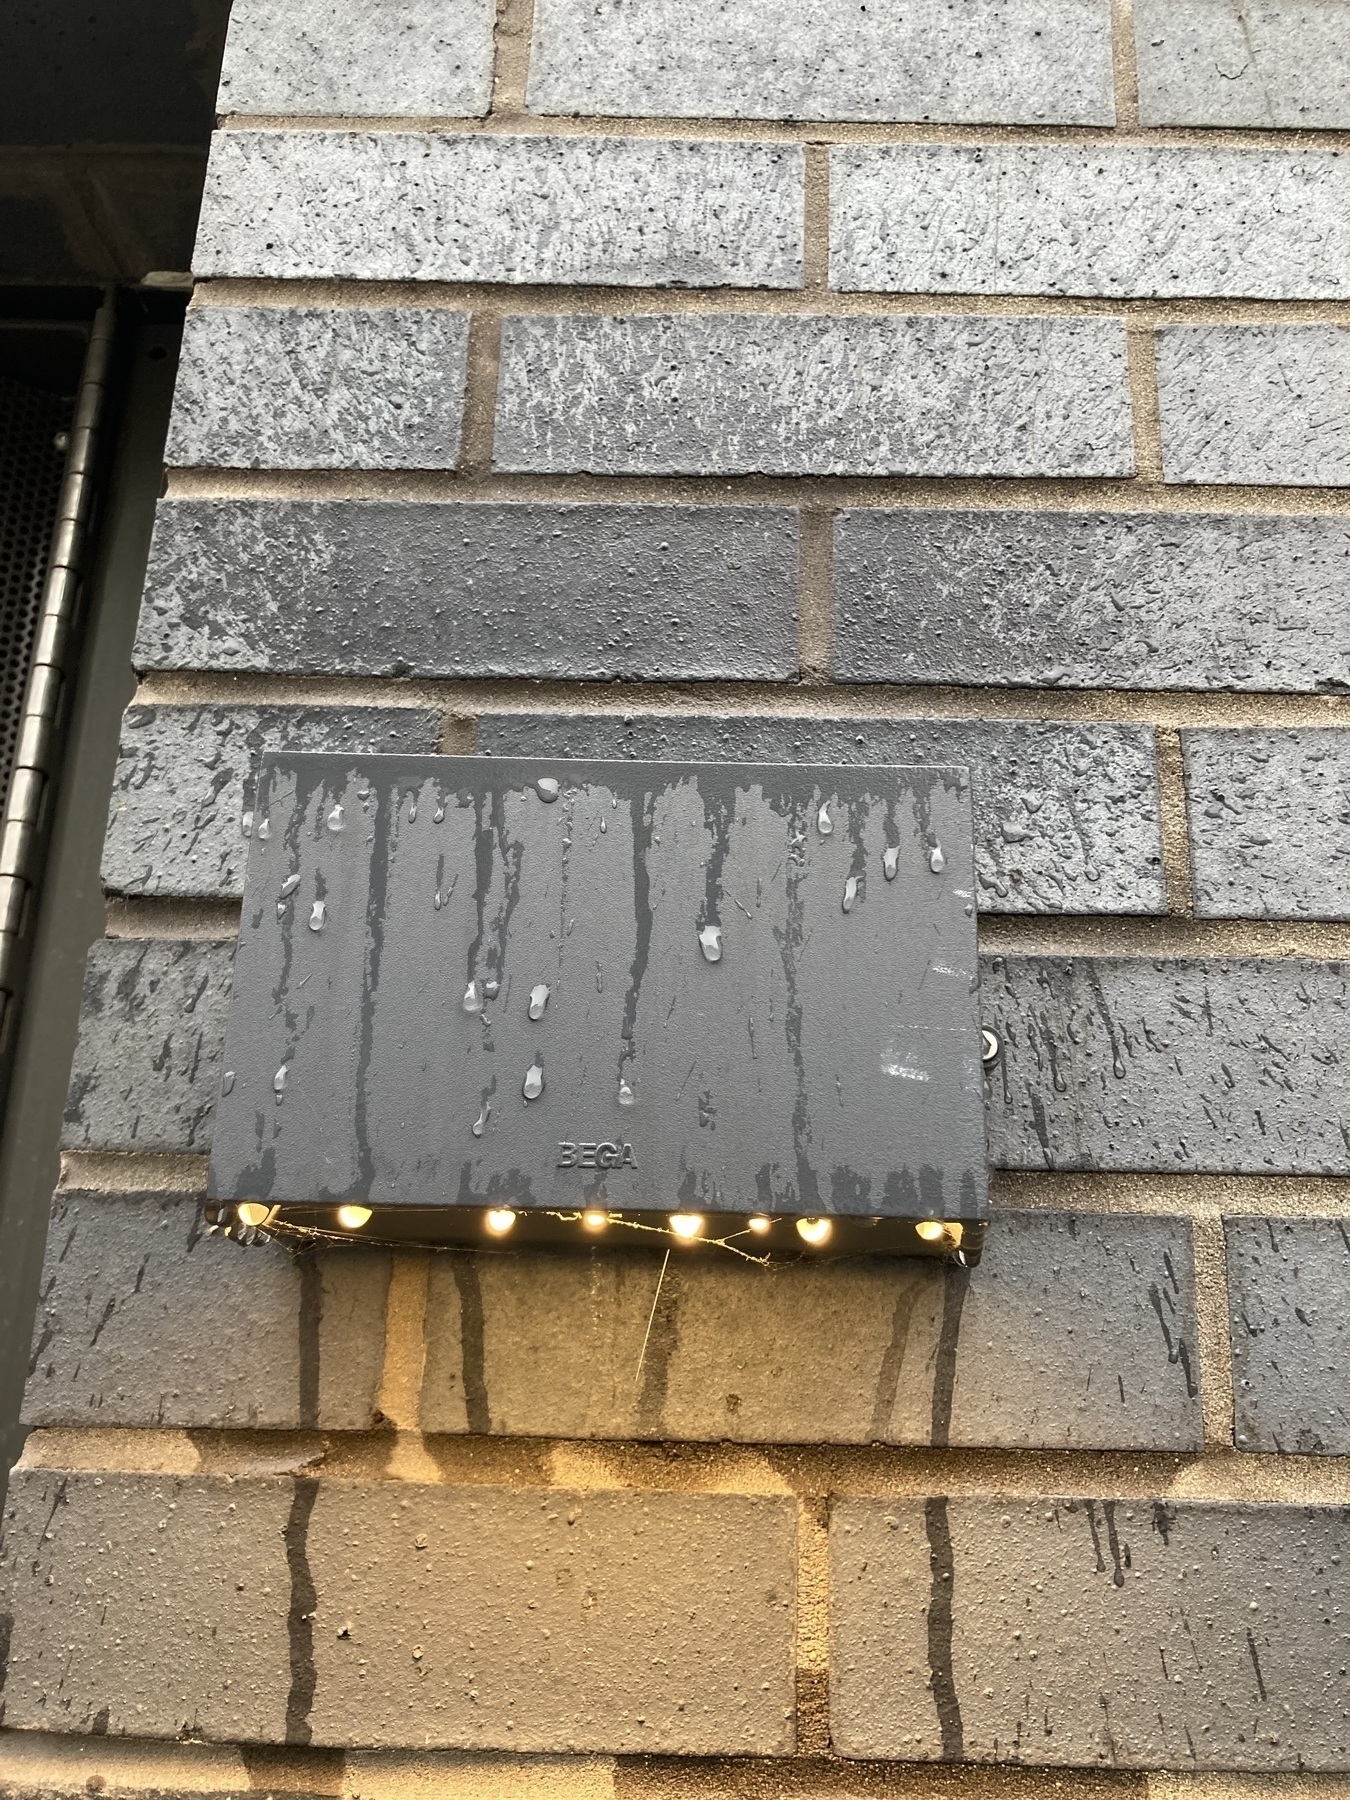 Rain bouncing off an exterior luminary